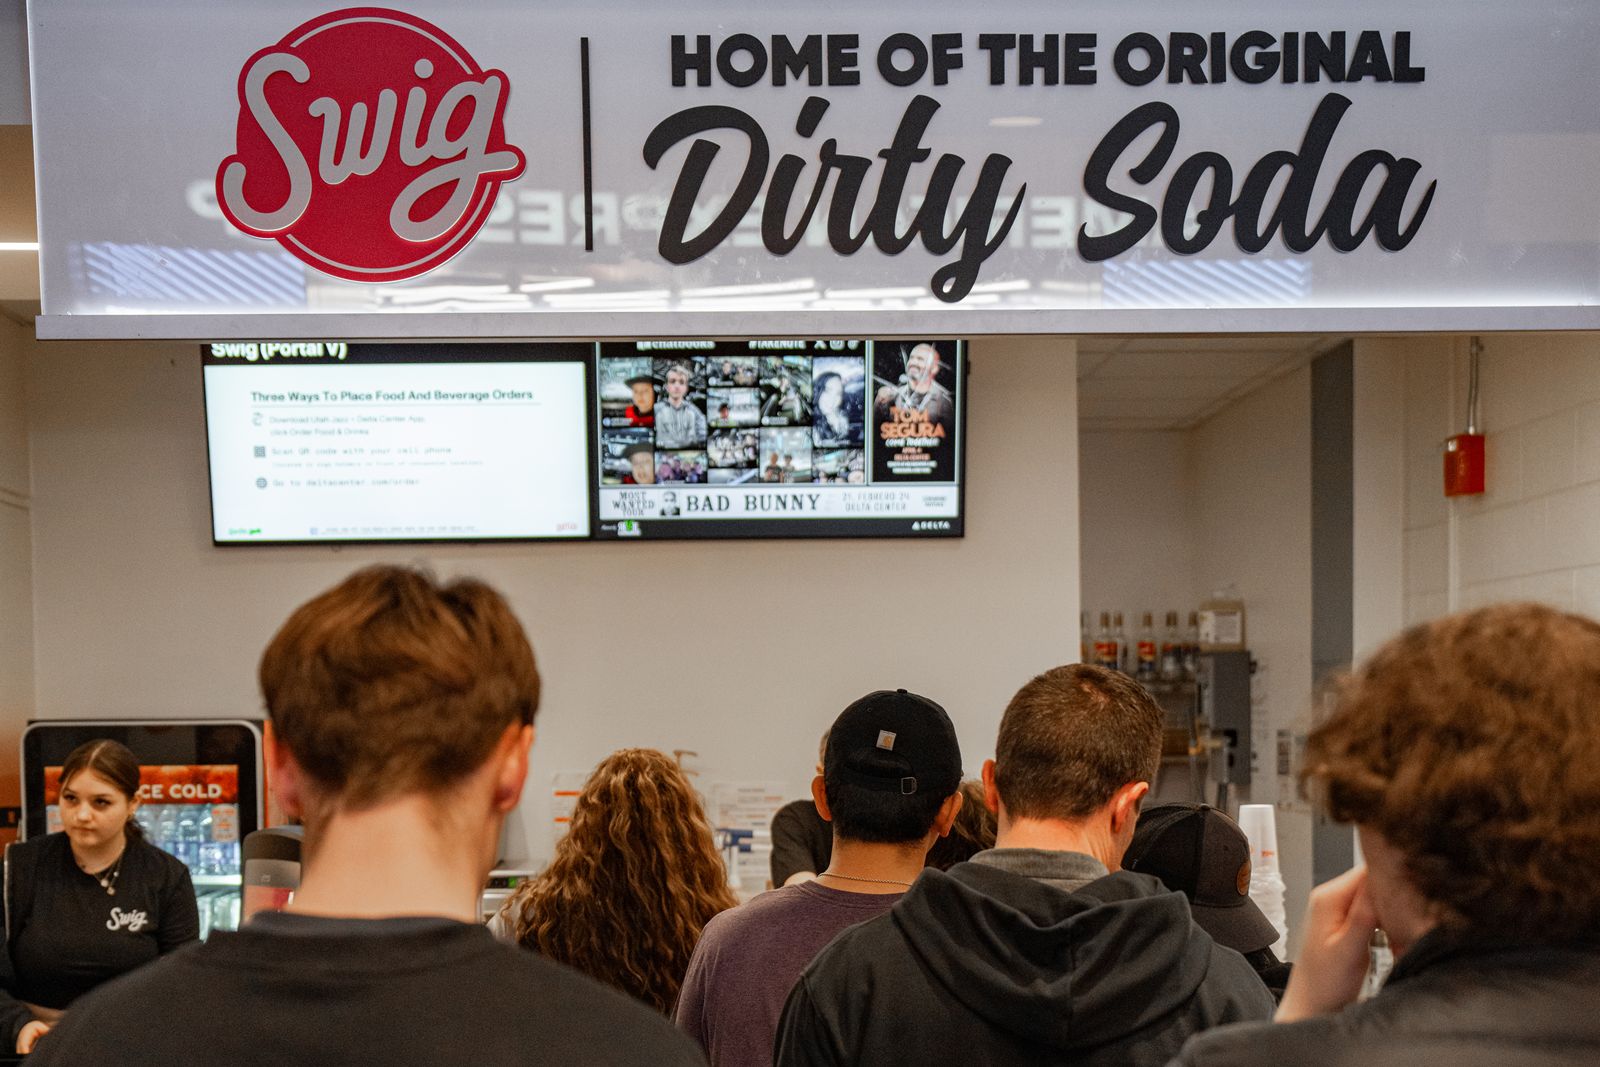 Swig Named the Official Soda Shop of Utah Jazz